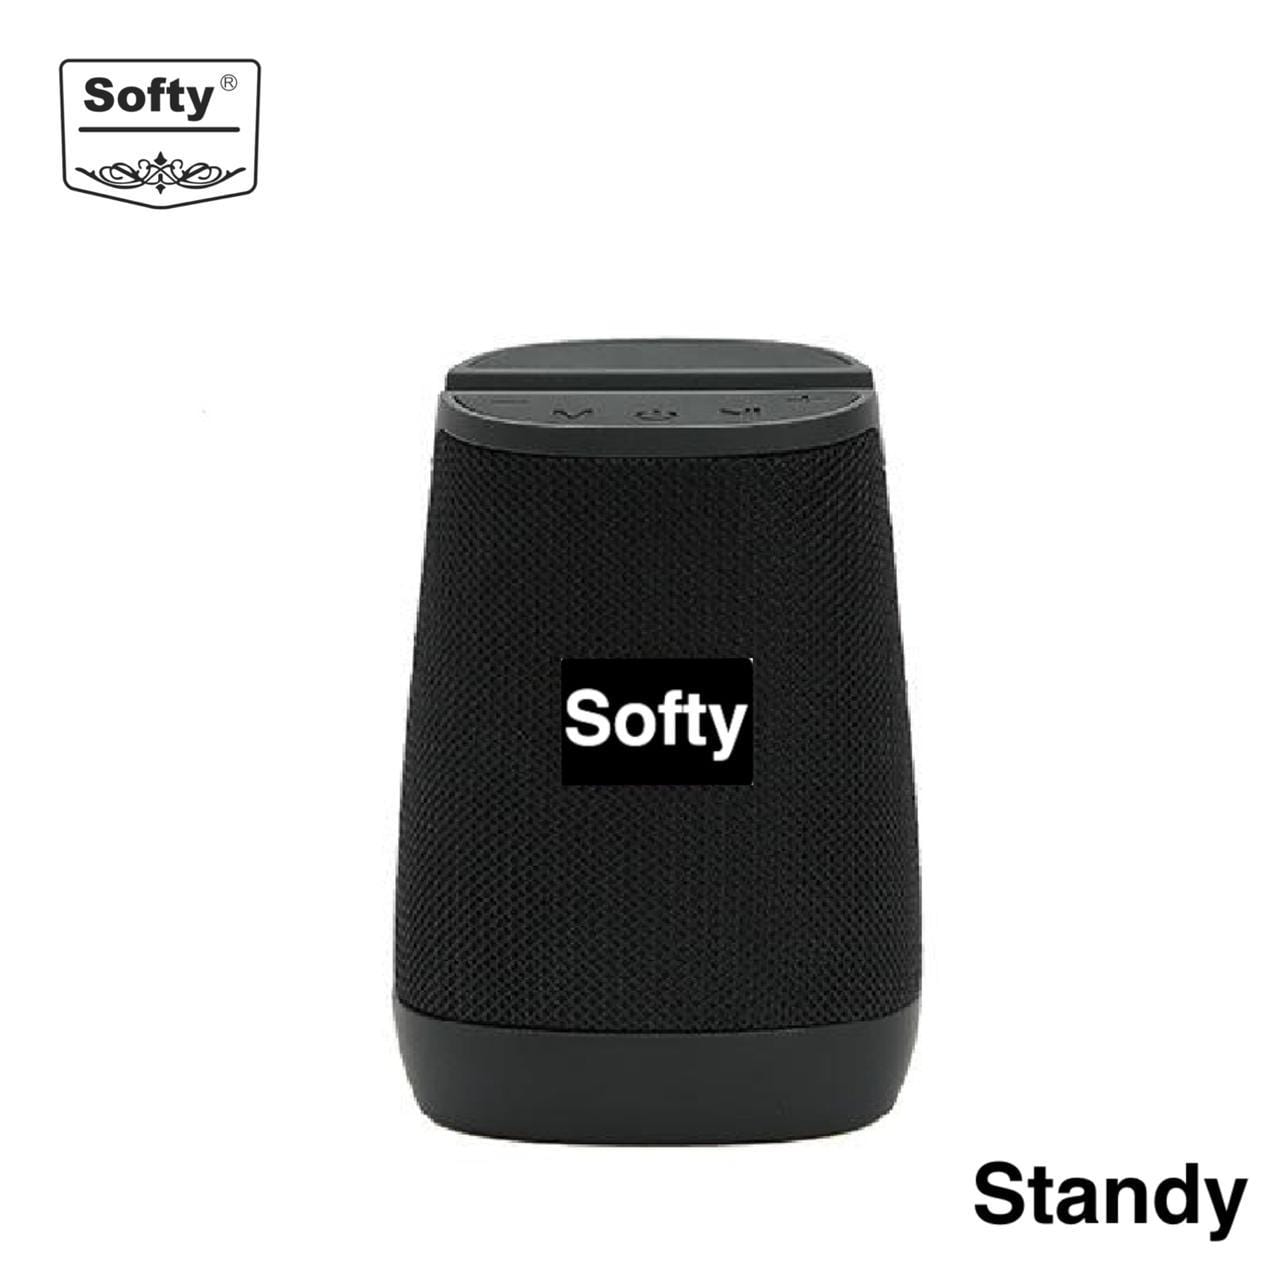 Softy premium quality Bluetooth speaker Standy-BLUETOOTH SPEAKERS-dealsplant